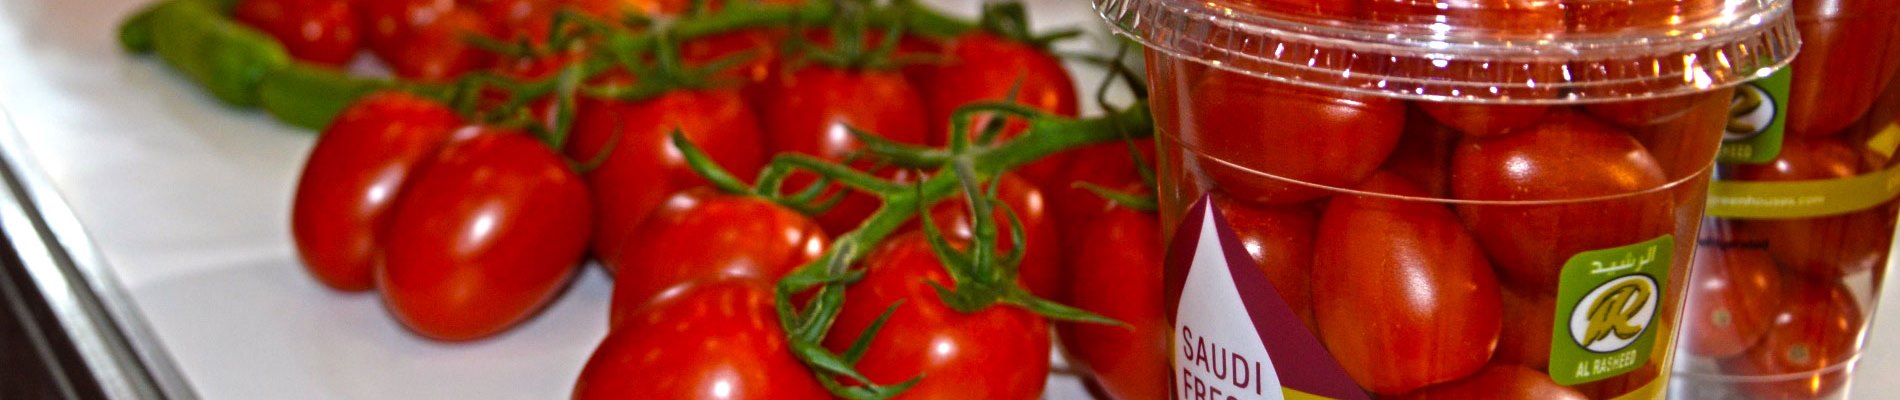 tomatoes marketing